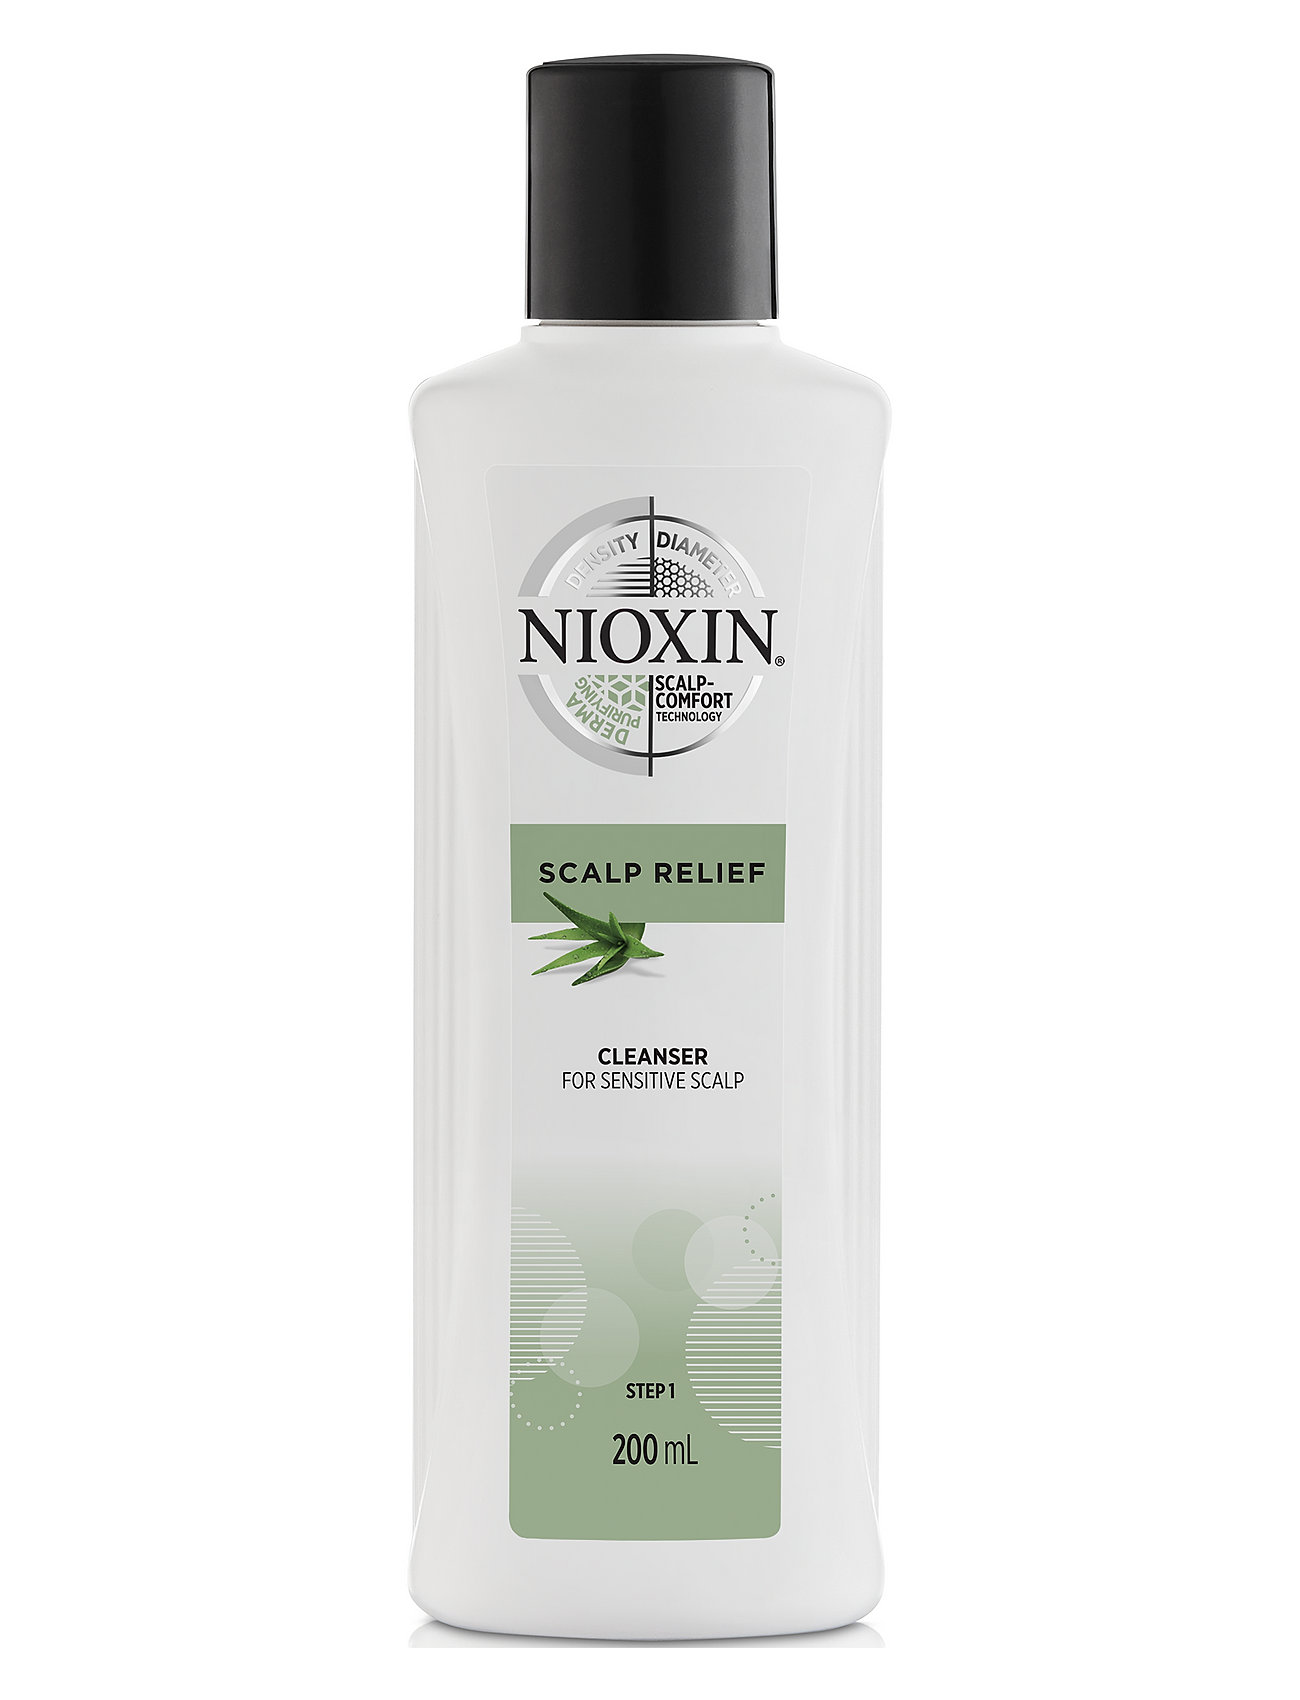 Nioxin "Nioxin Scalp Relief Shampoo Nude Nioxin"